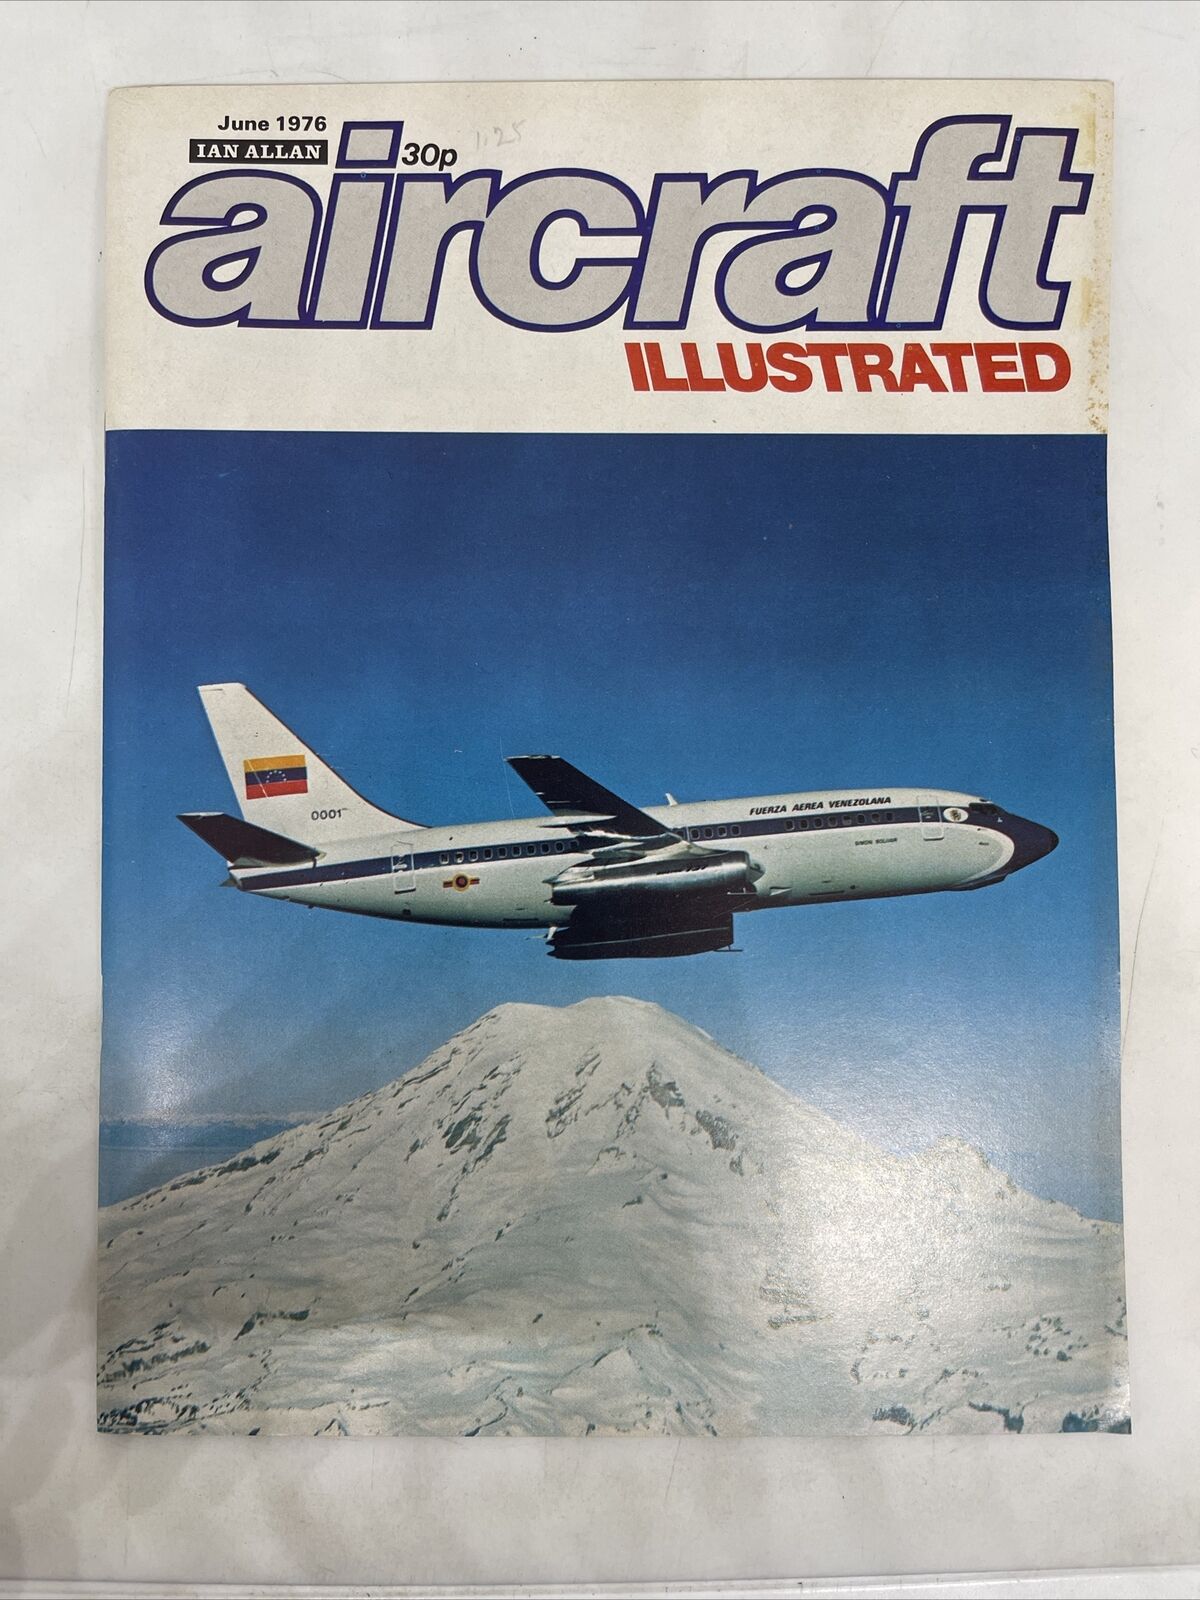 AIRCRAFT ILLUSTRATED Magazine JUNE 1976 IAN ALLAN aviation airlines airways 737